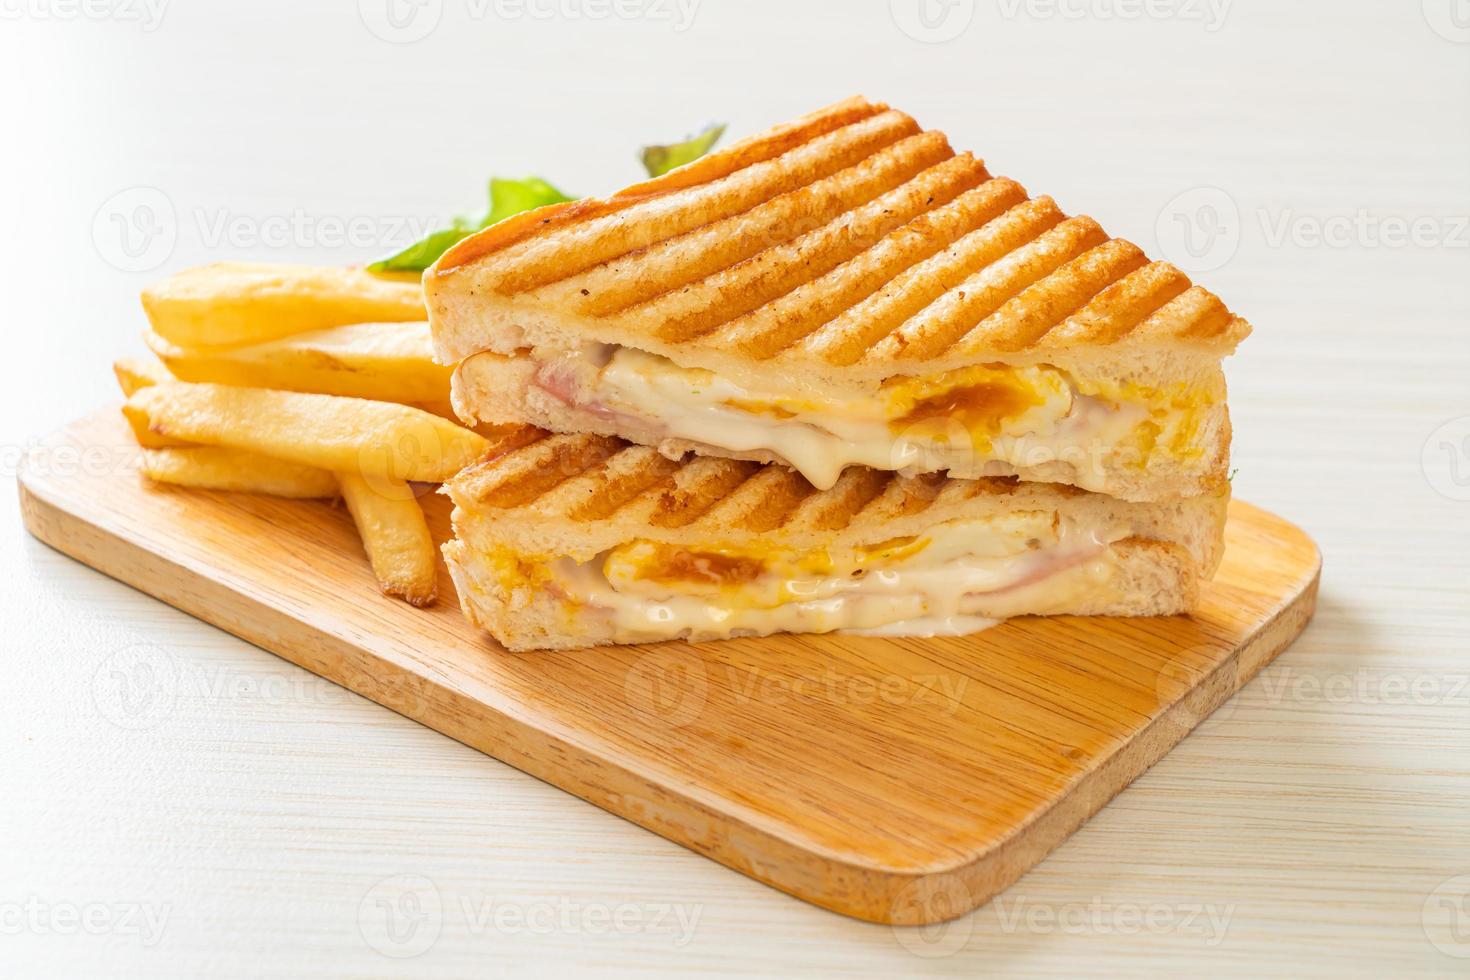 sanduíche de presunto e queijo com ovo e batata frita foto